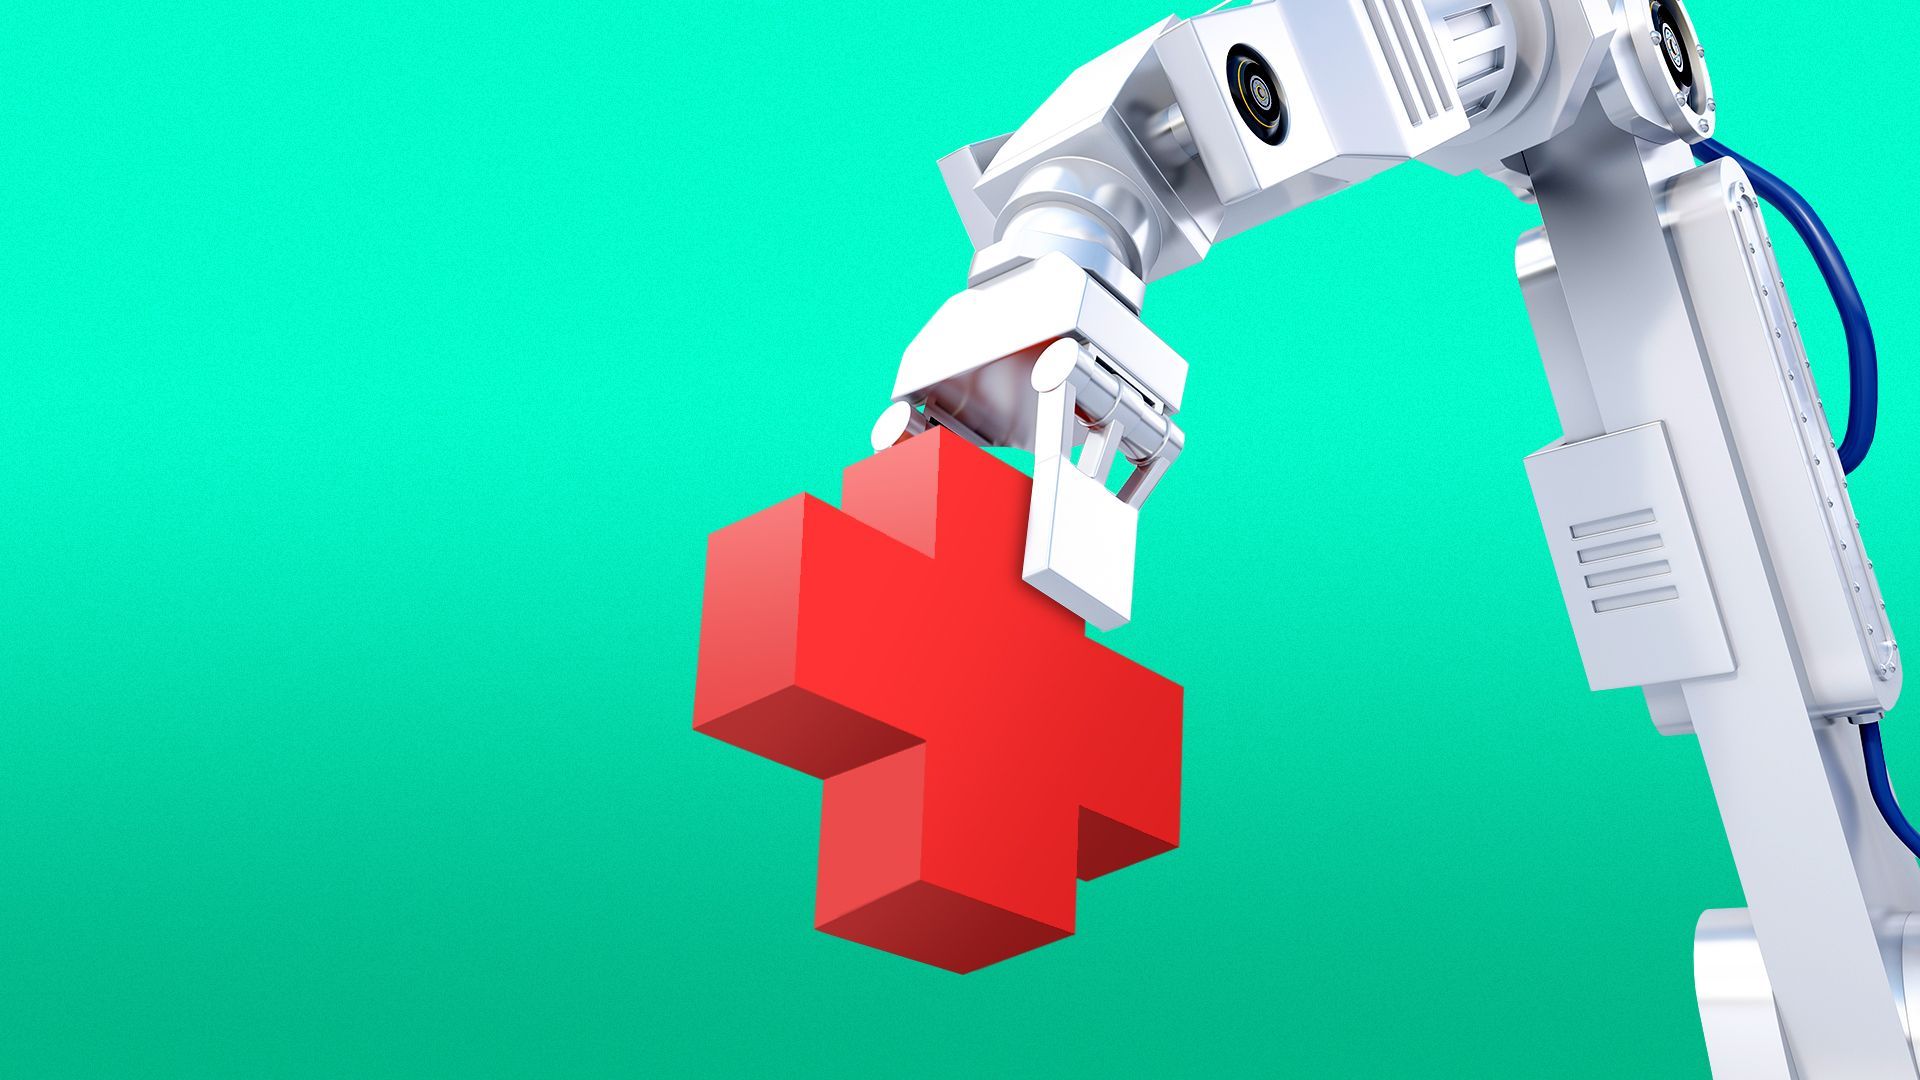 Illustration of a robot arm lifting a medical cross